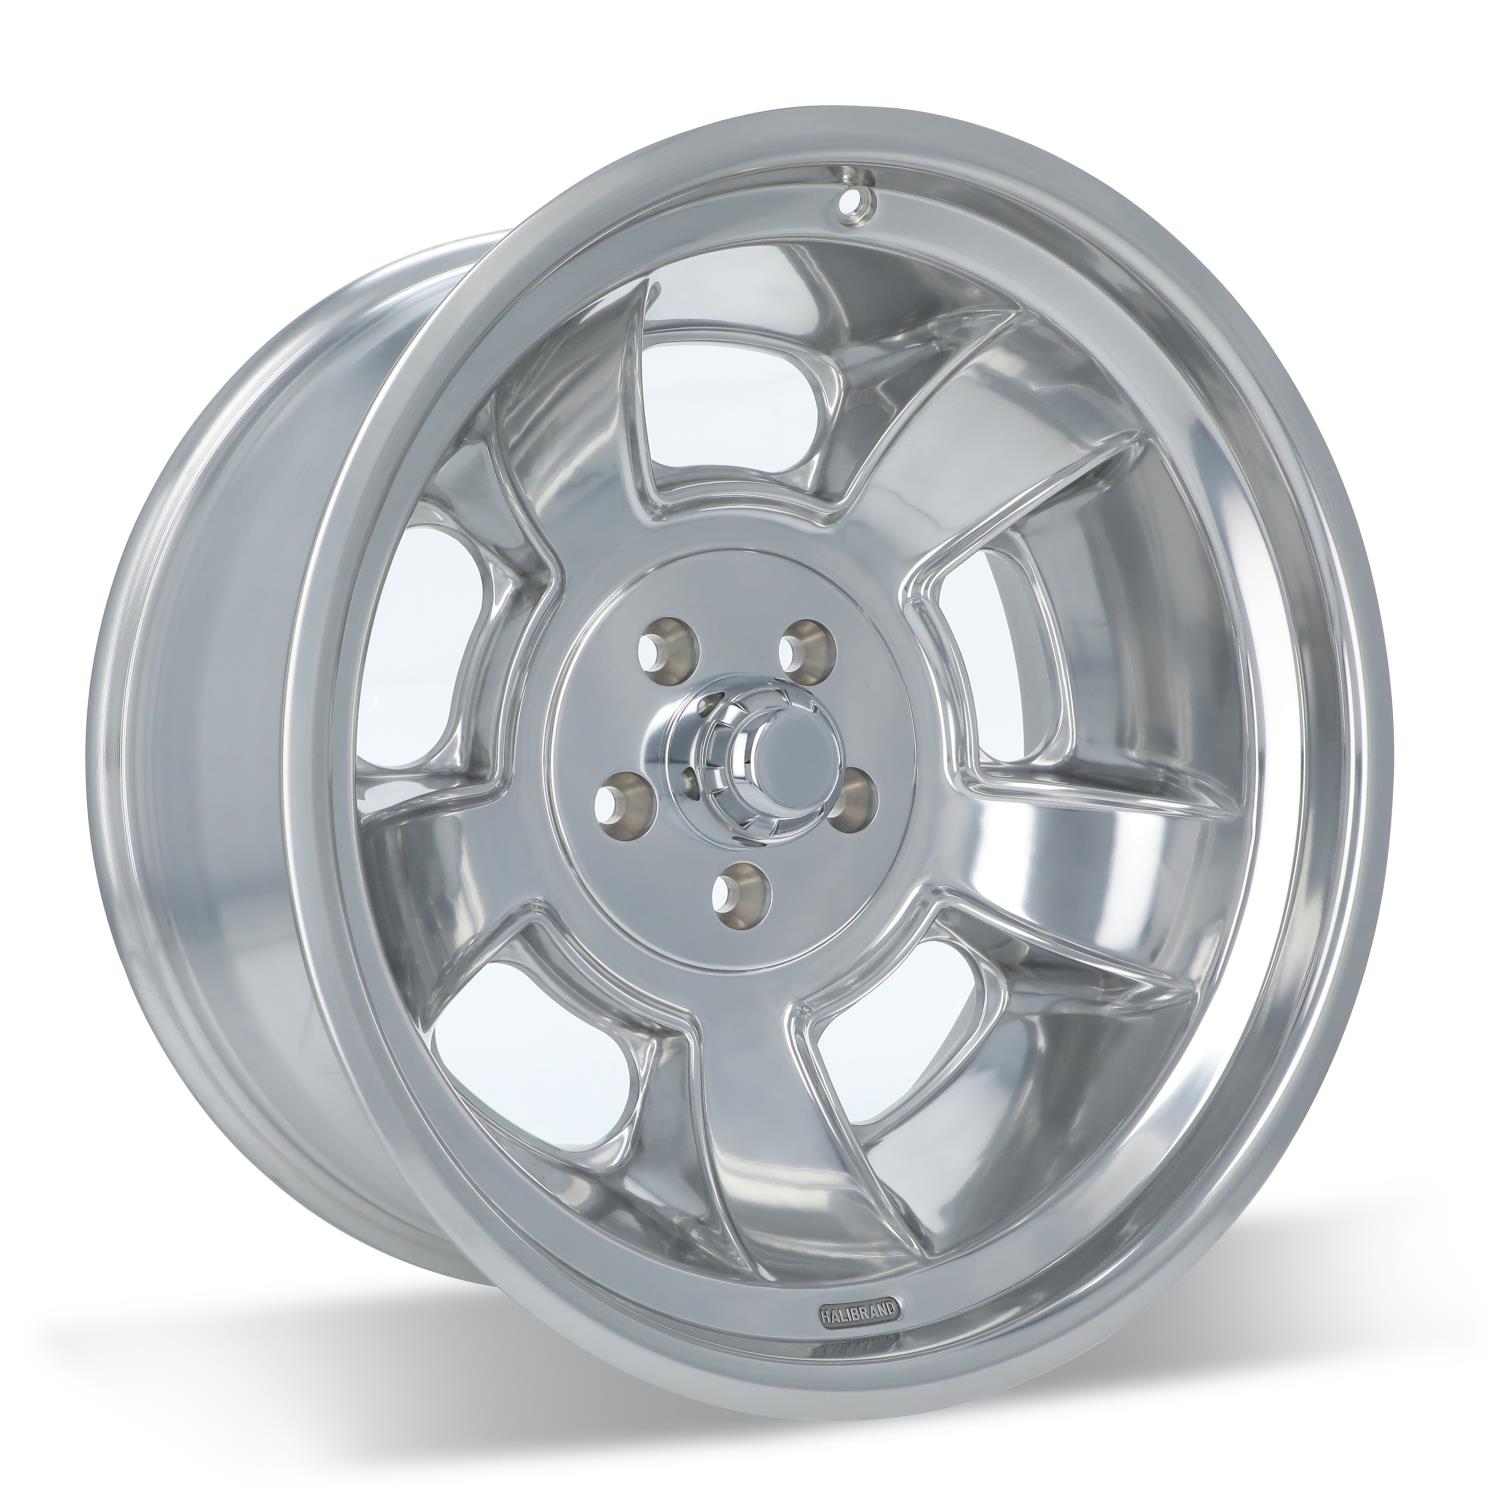 Sprint Rear Wheel, Size: 20x10", Bolt Pattern: 5x5", Backspace: 4" [Polished - Gloss Clearcoat]